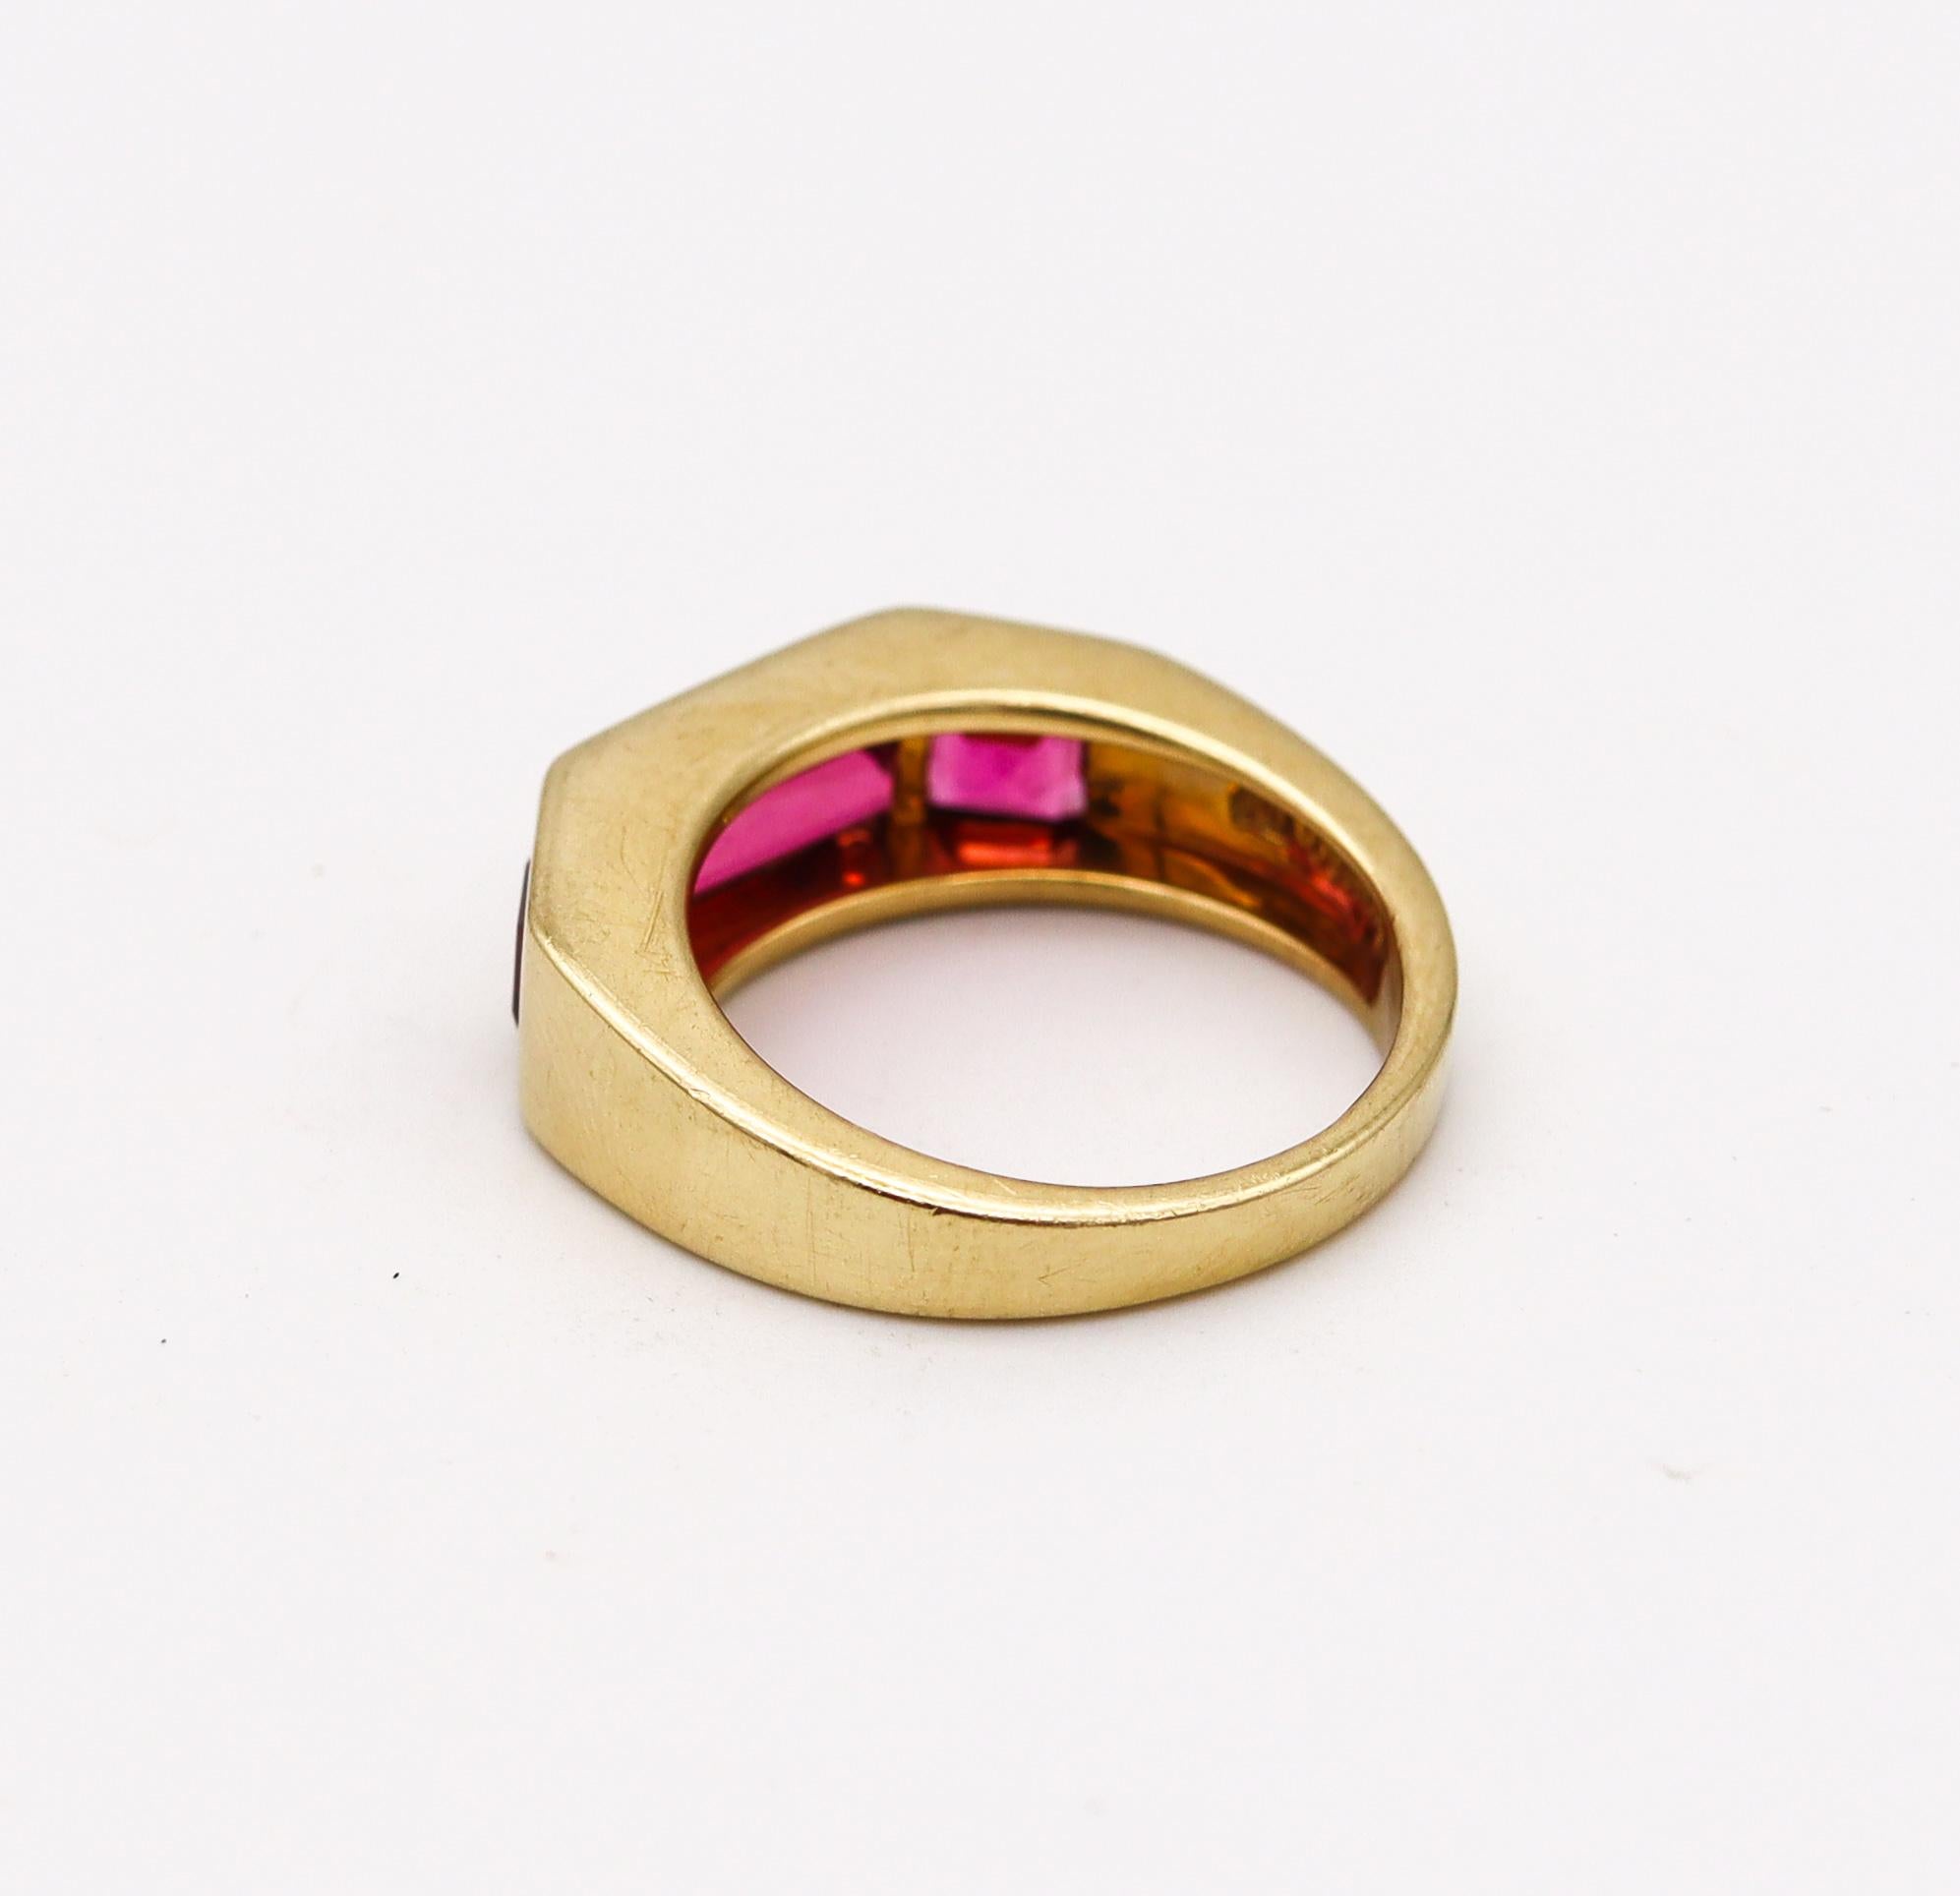 Tiffany & Co Paloma Picasso Studio Geometric Ring 18Kt Gold 4.34 Cts Tourmalines 1